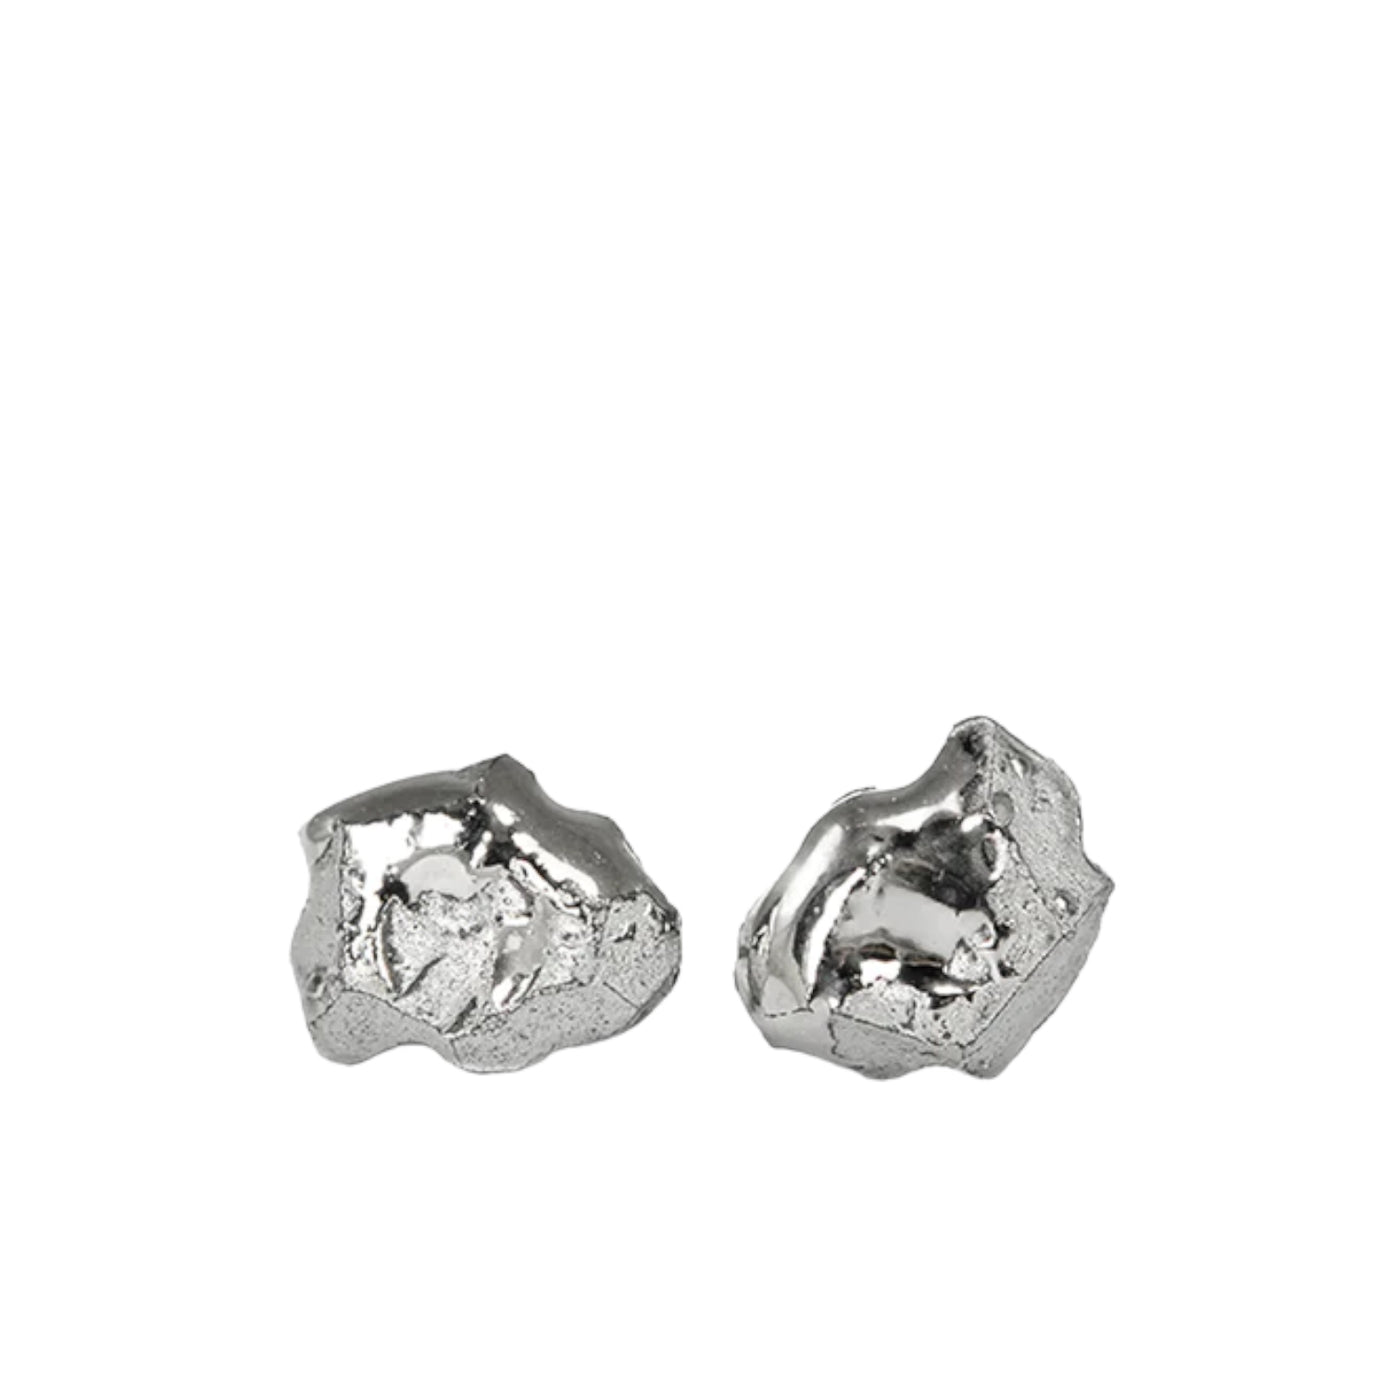 "Merel" porcelain earrings